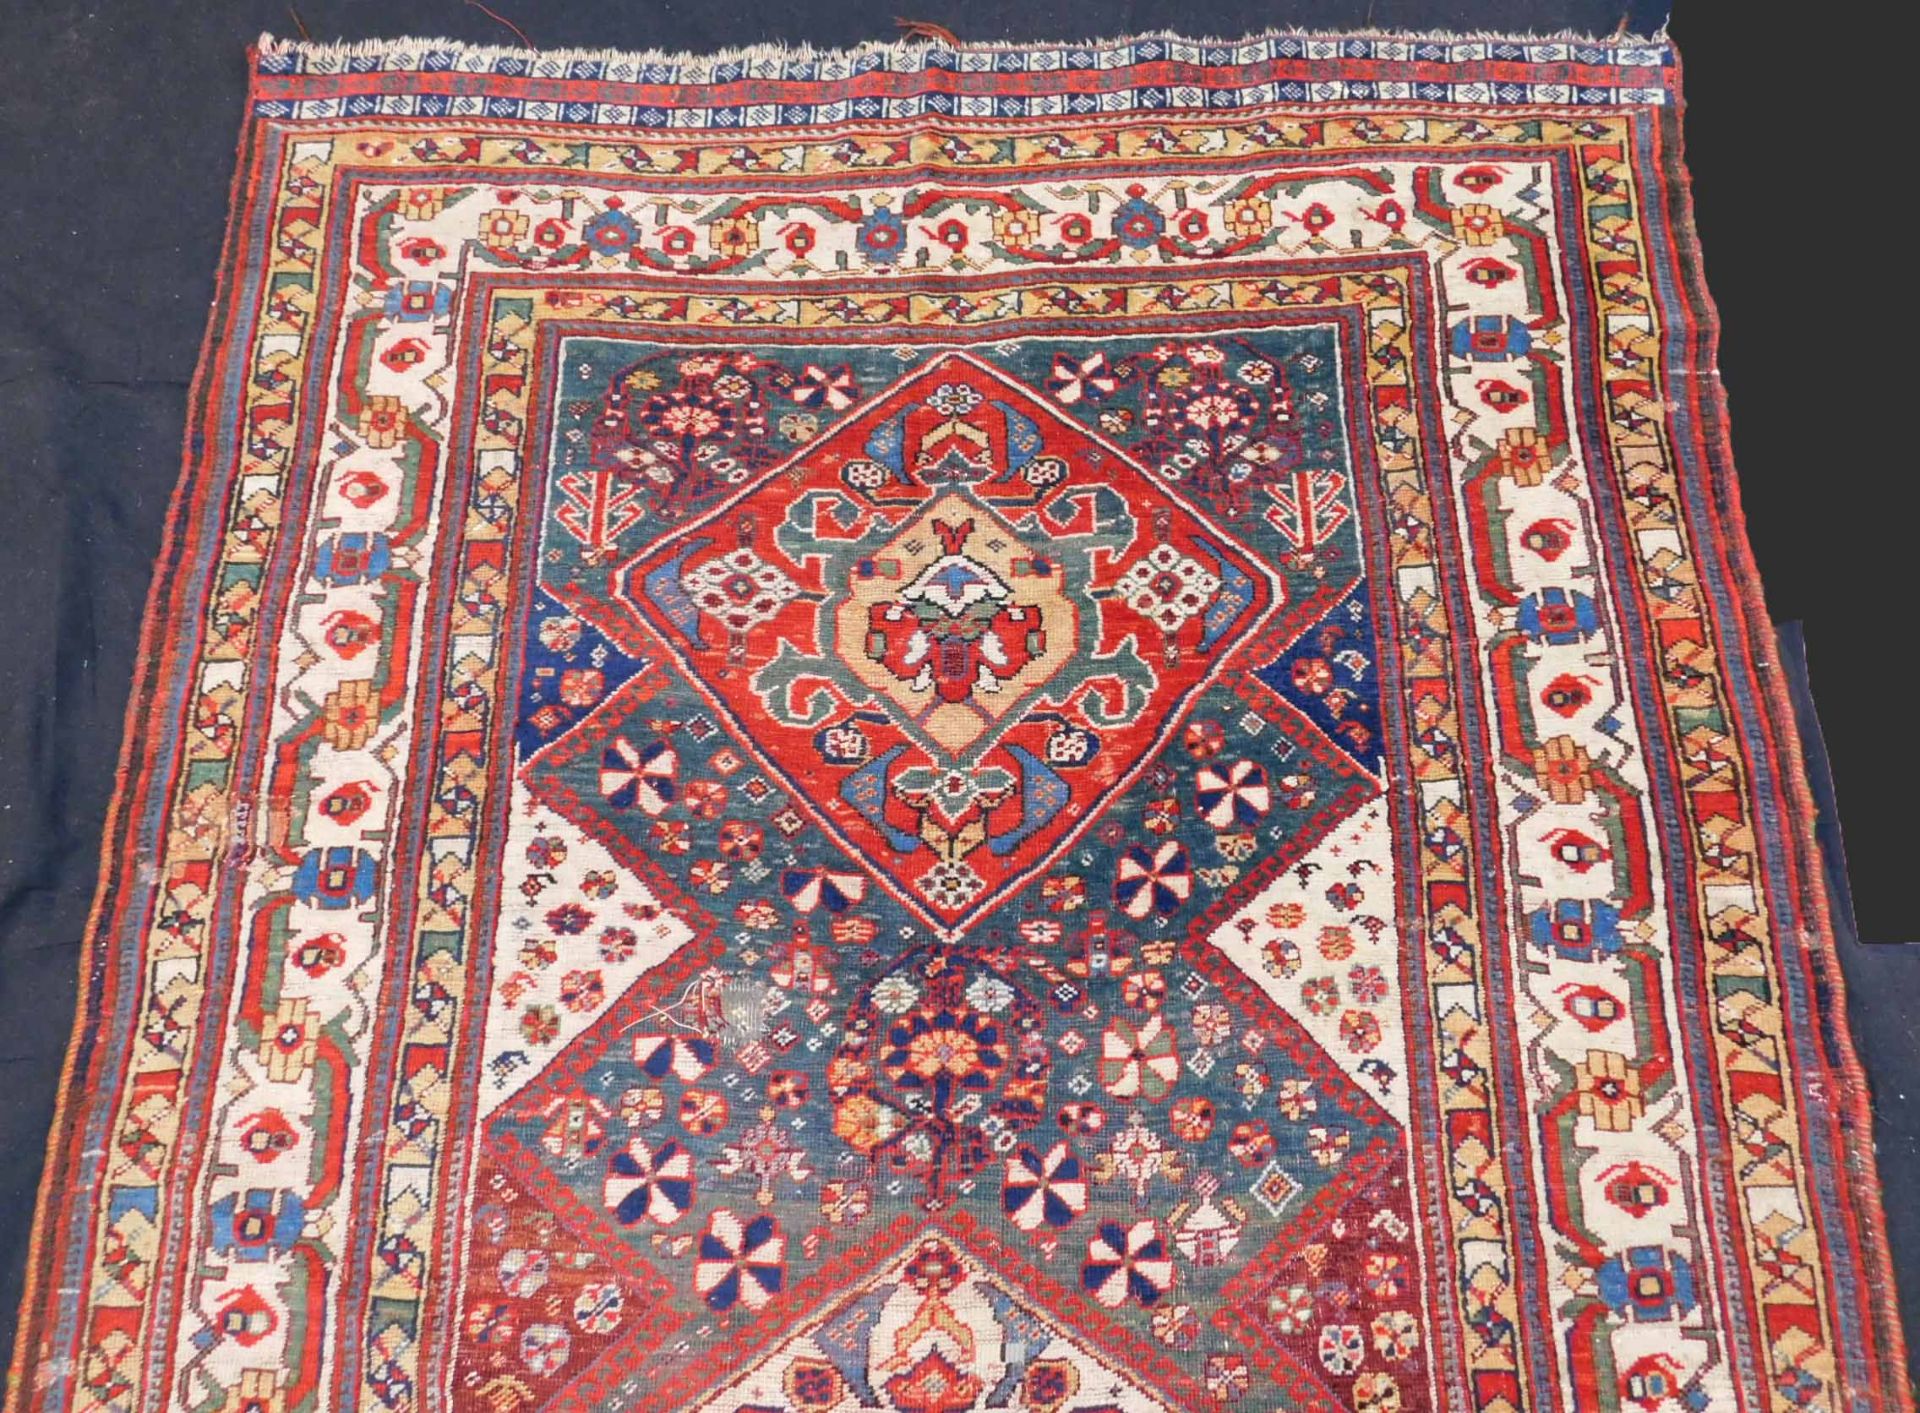 Qashqai Persian carpet. Iran. Antique, around 120-160 years old. - Image 4 of 9